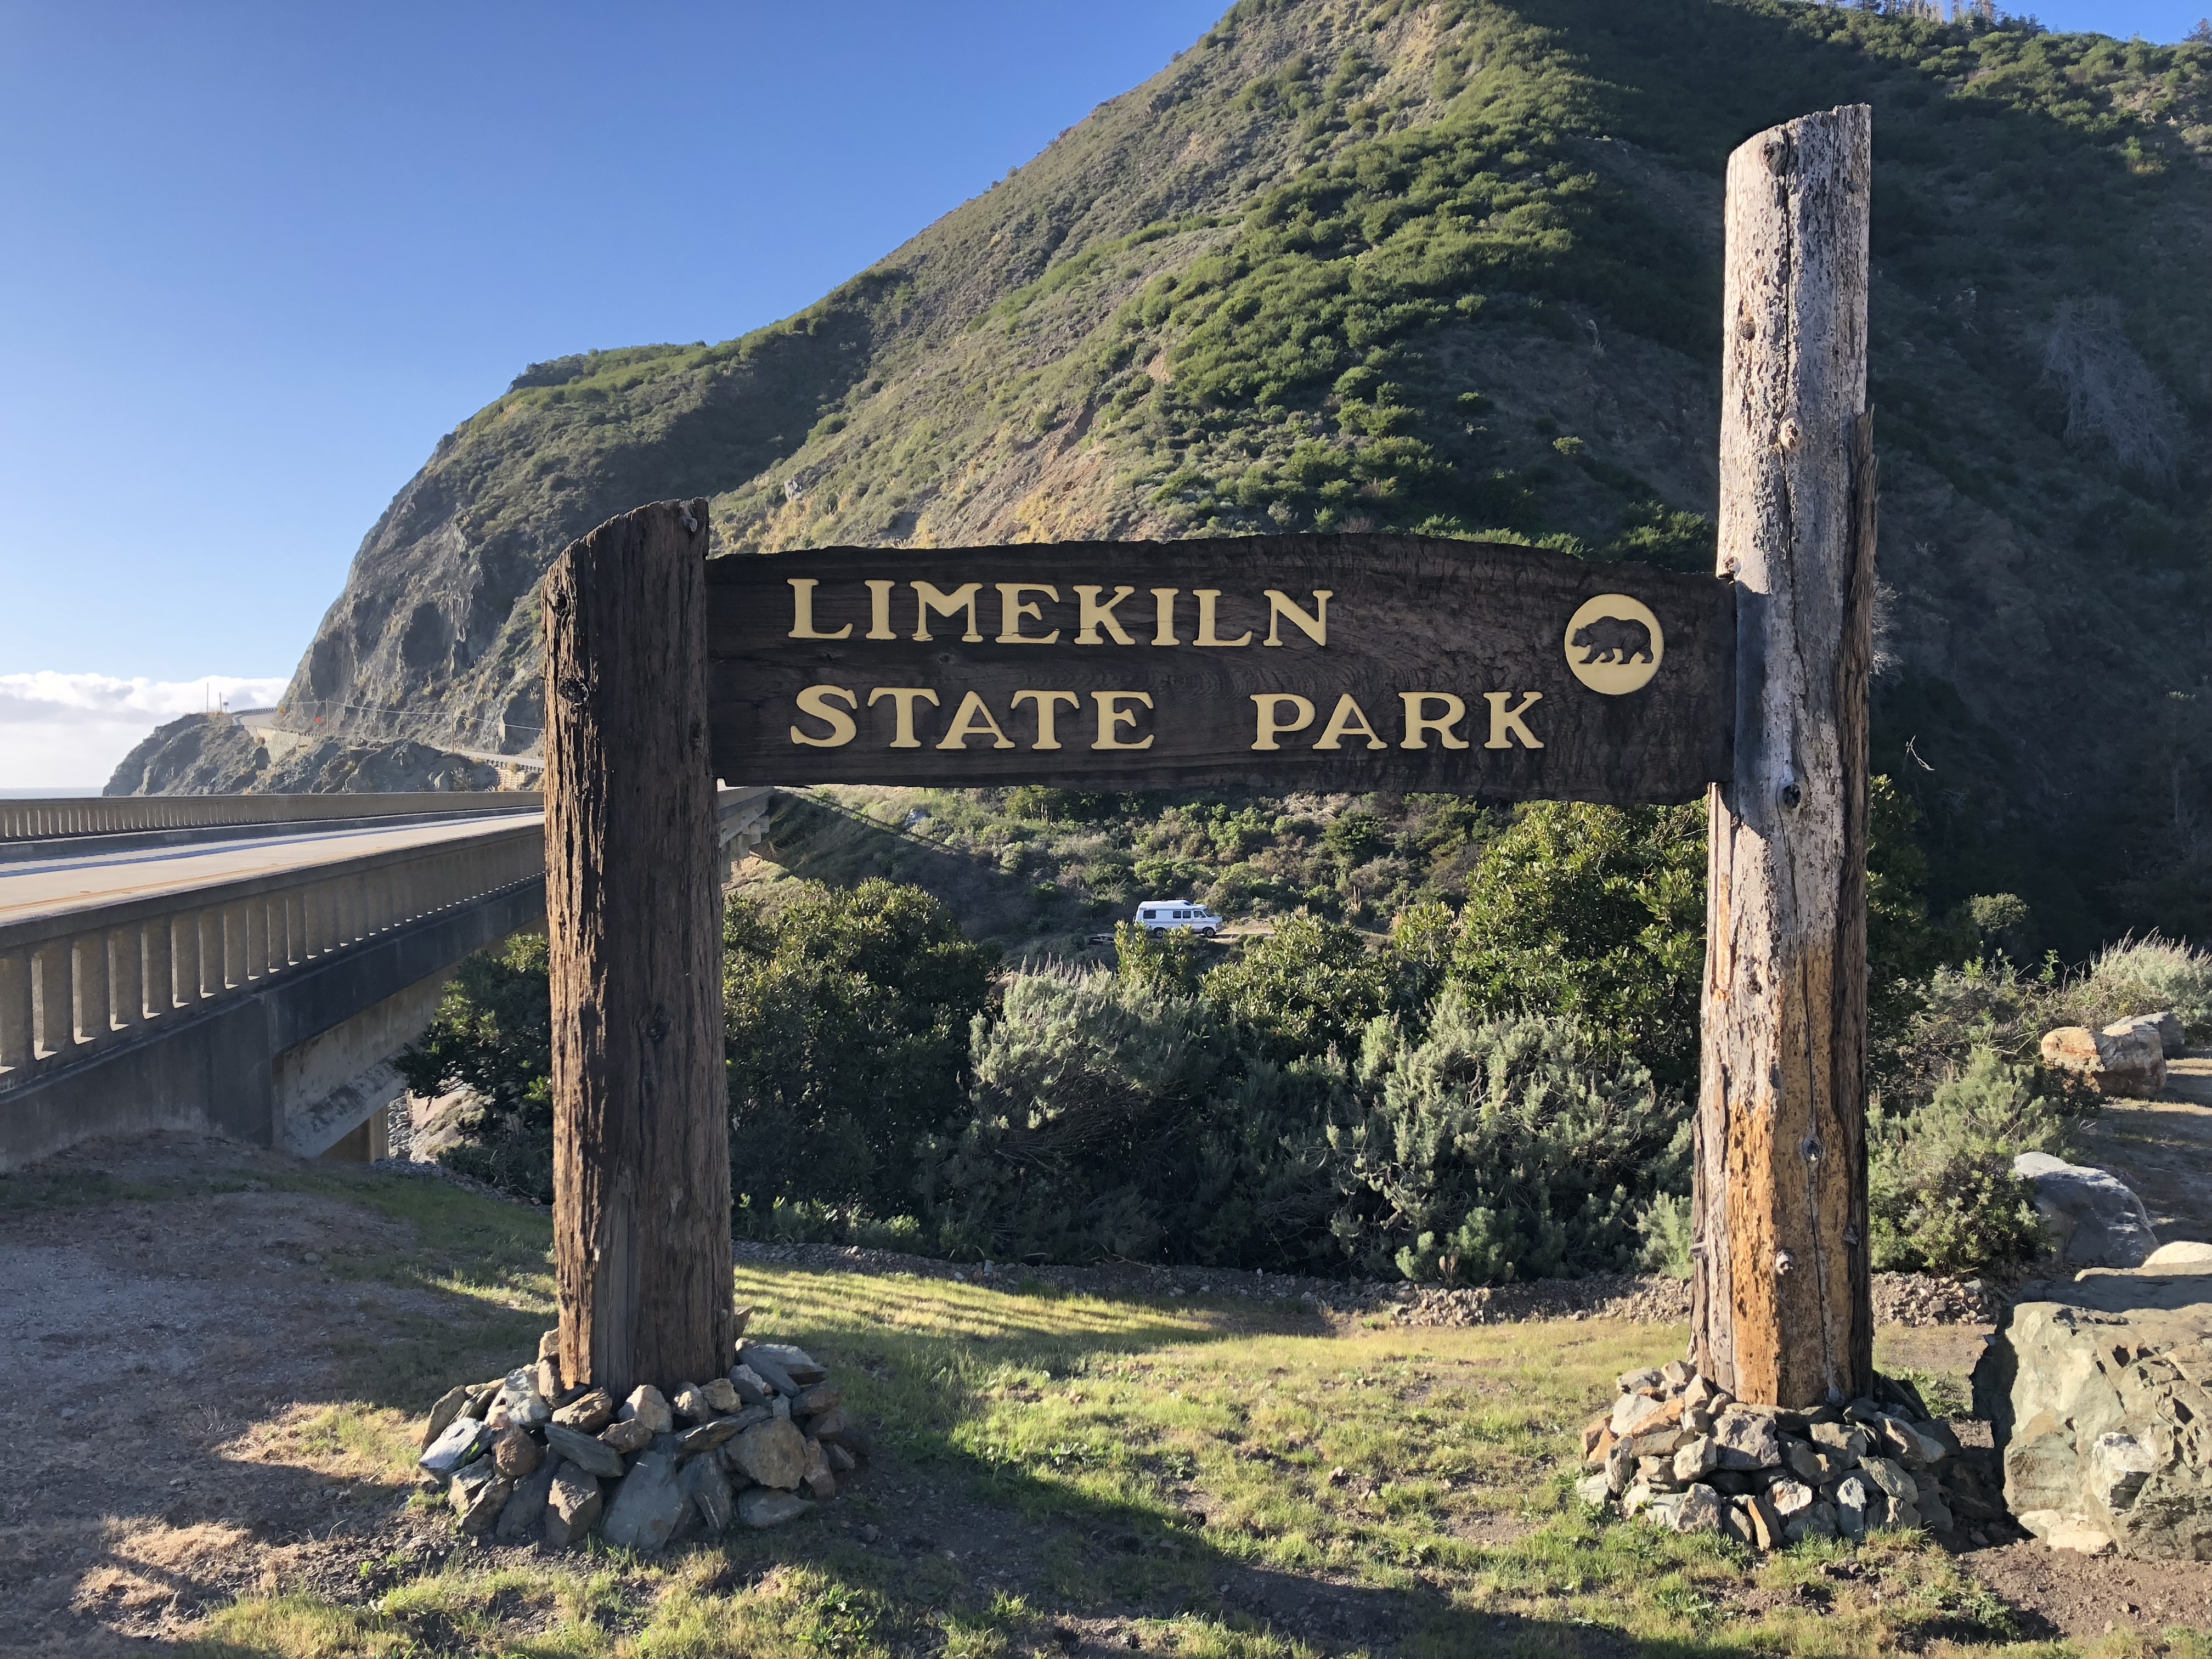 The entrance to Limekiln State Park